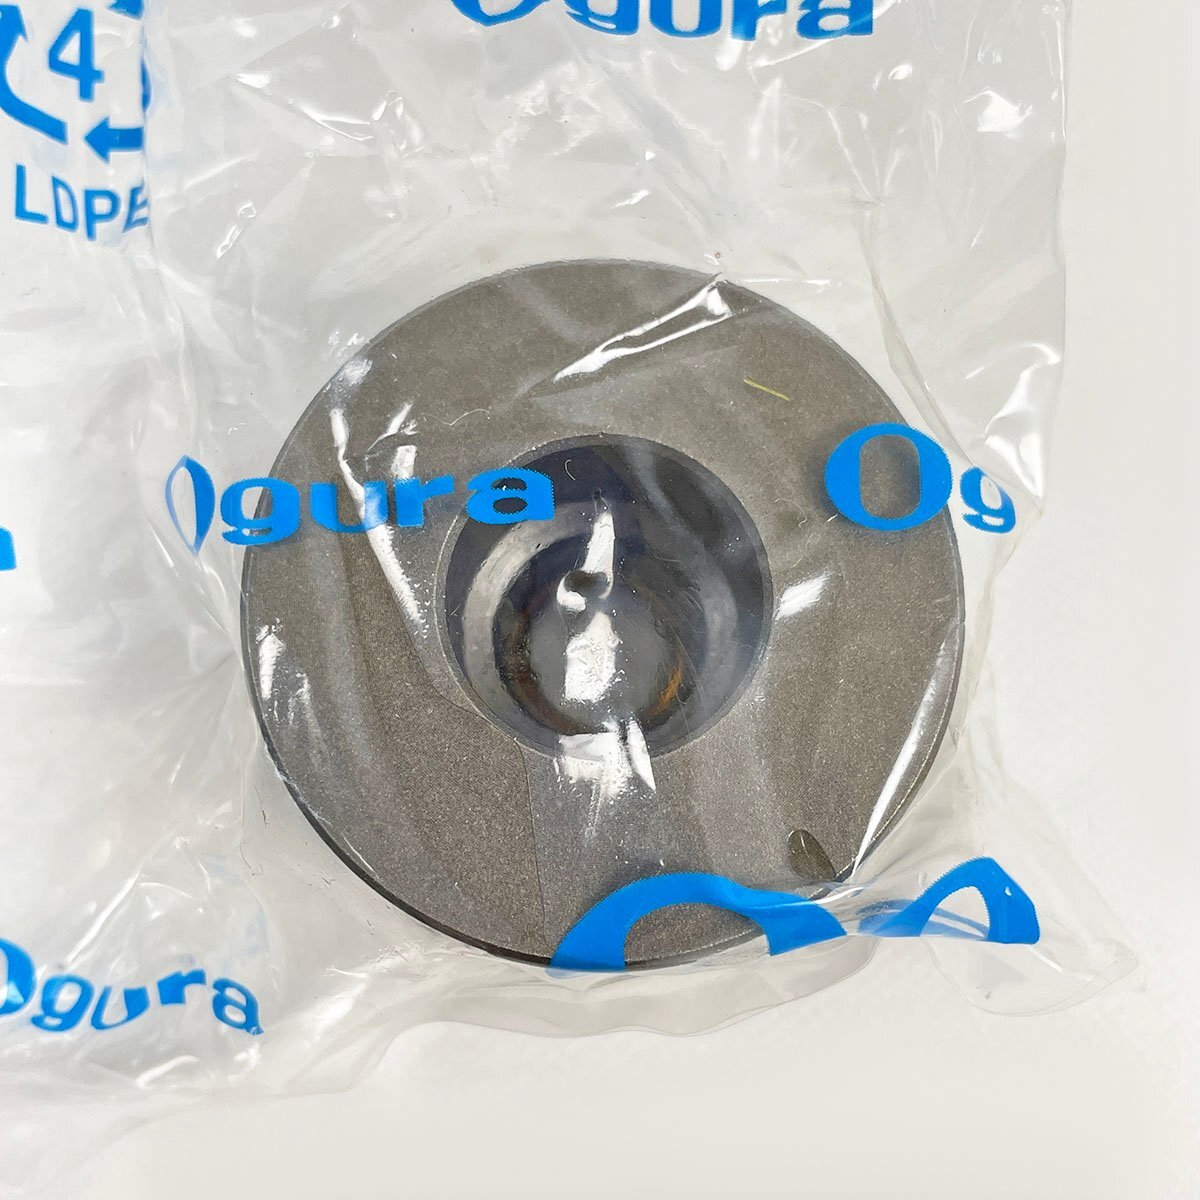 Ogura オグラ 油圧式 パンチャー HPC-2213W 替刃 丸穴ダイス+ポンチ 12B/12 セット [K5029]の画像3